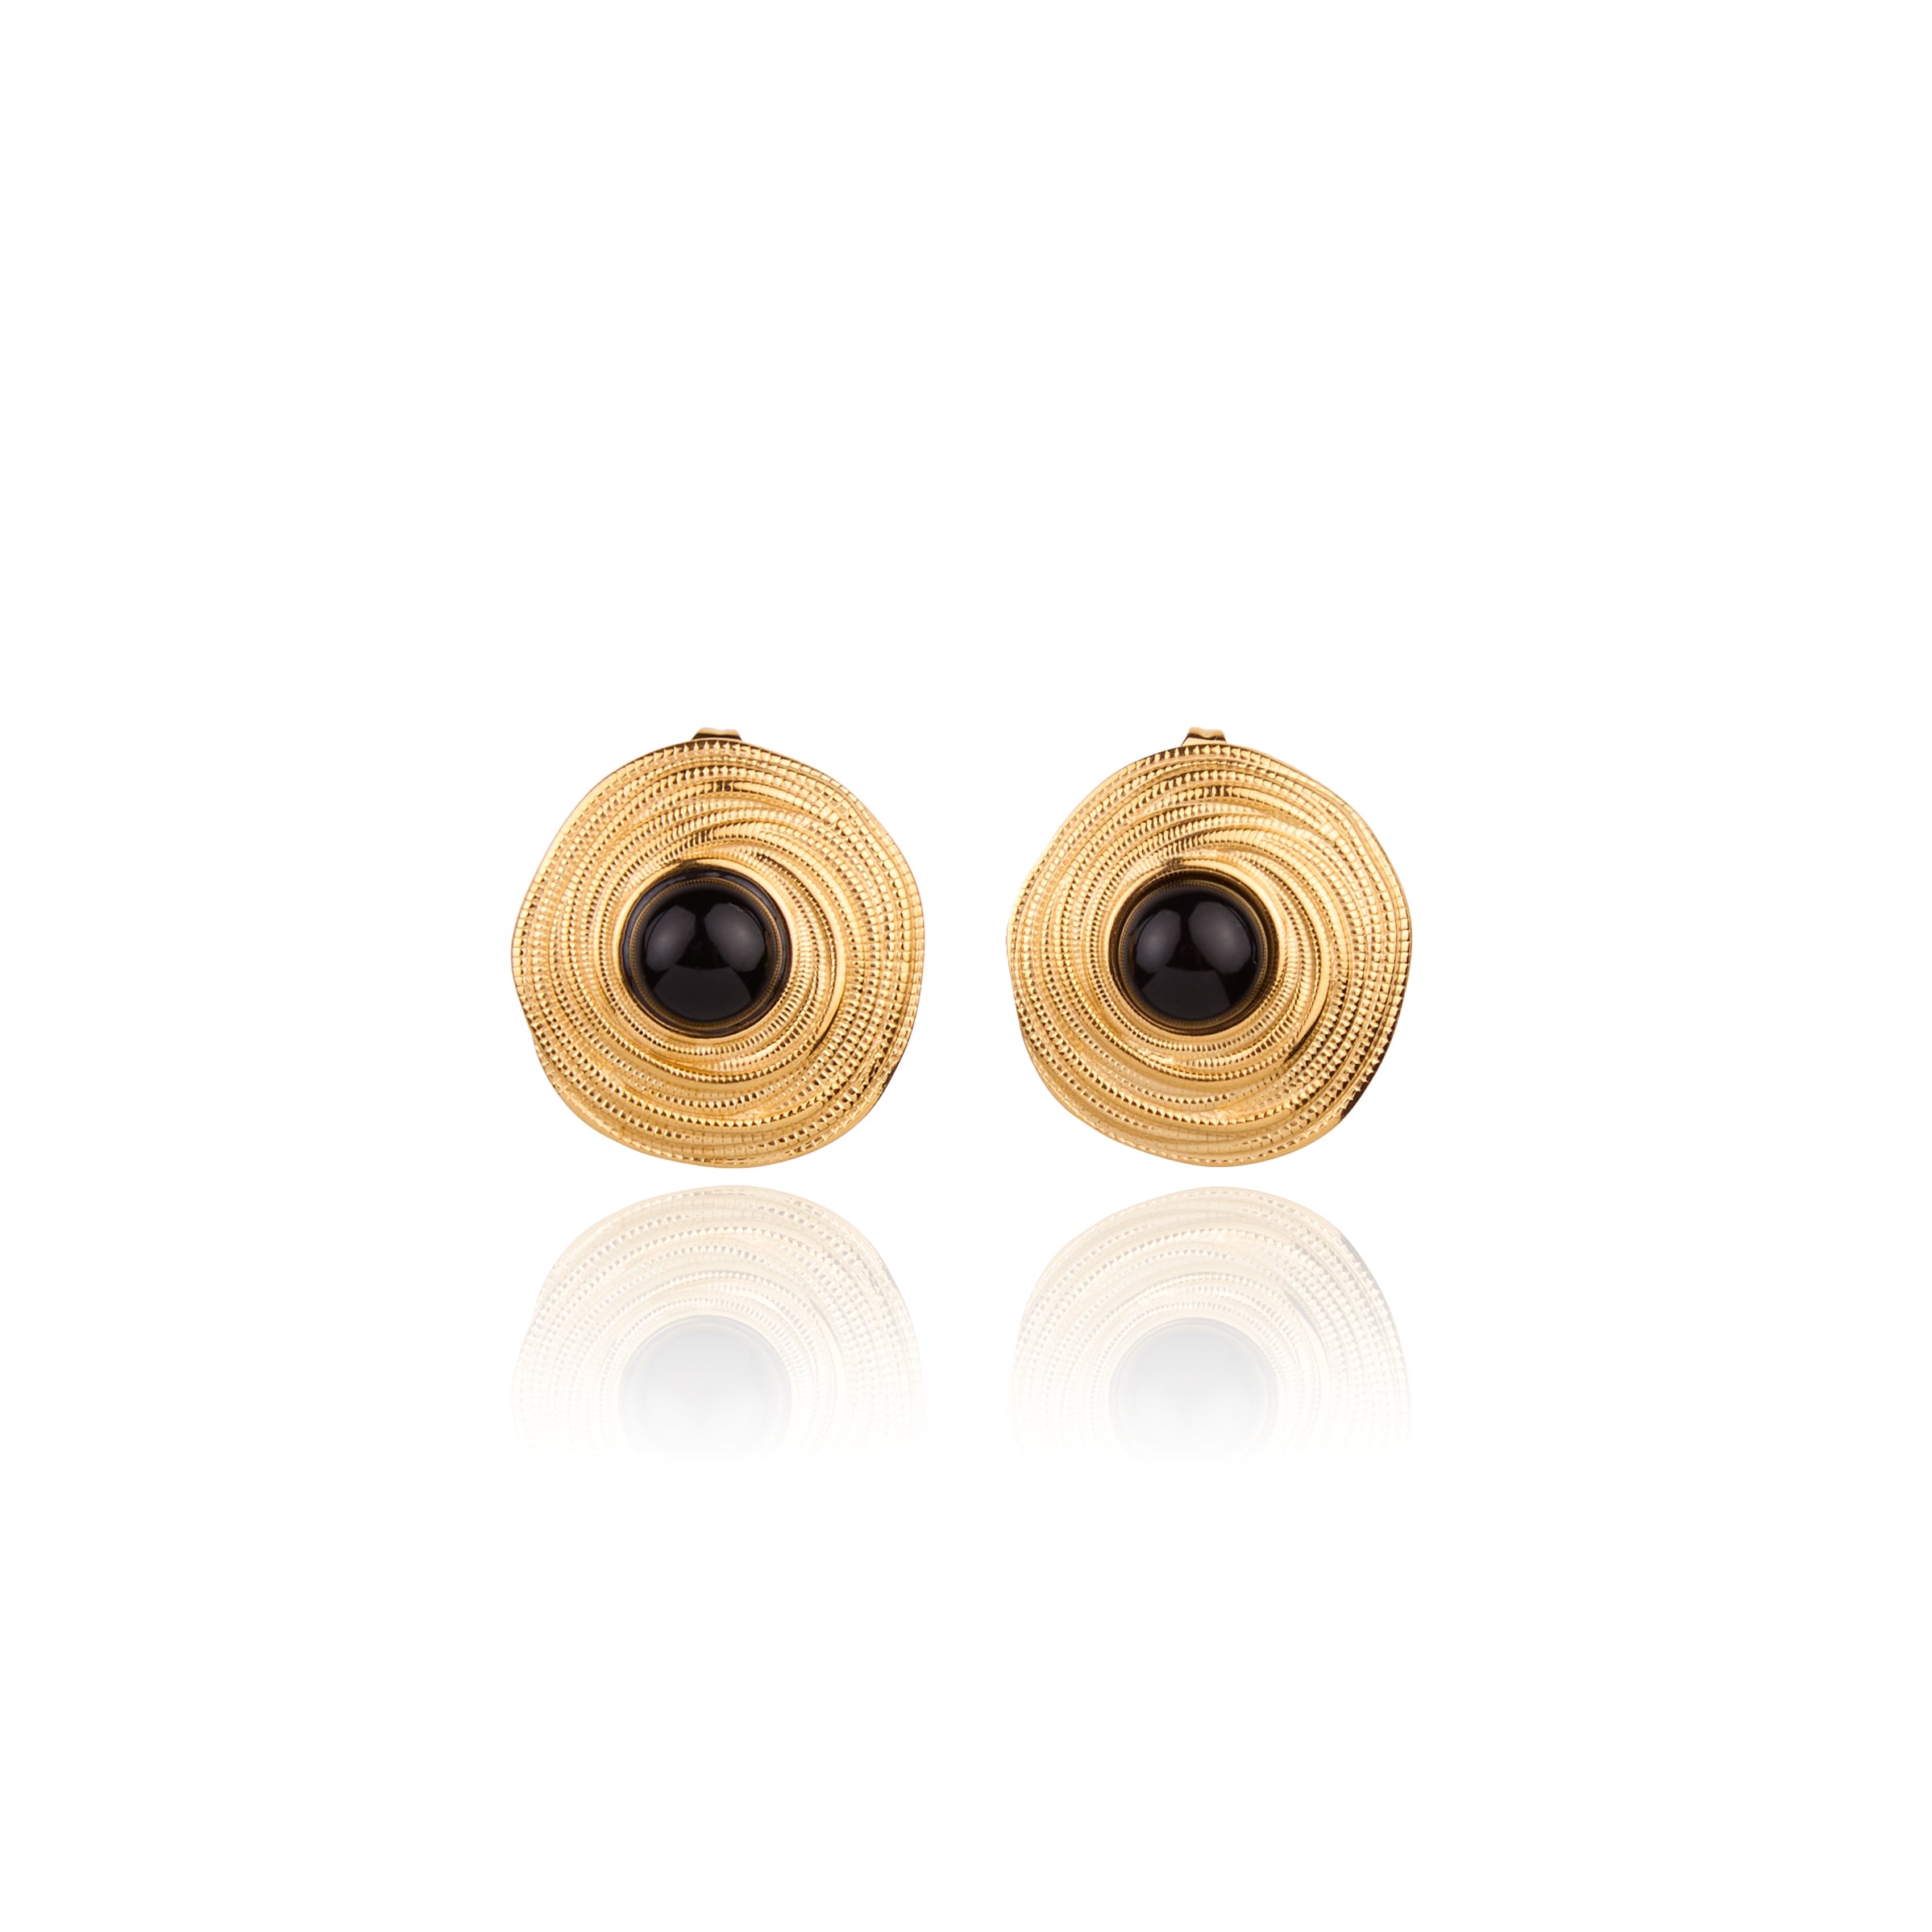 Tseatjewelry Women's Manuka Gold Plated Statement Earrings